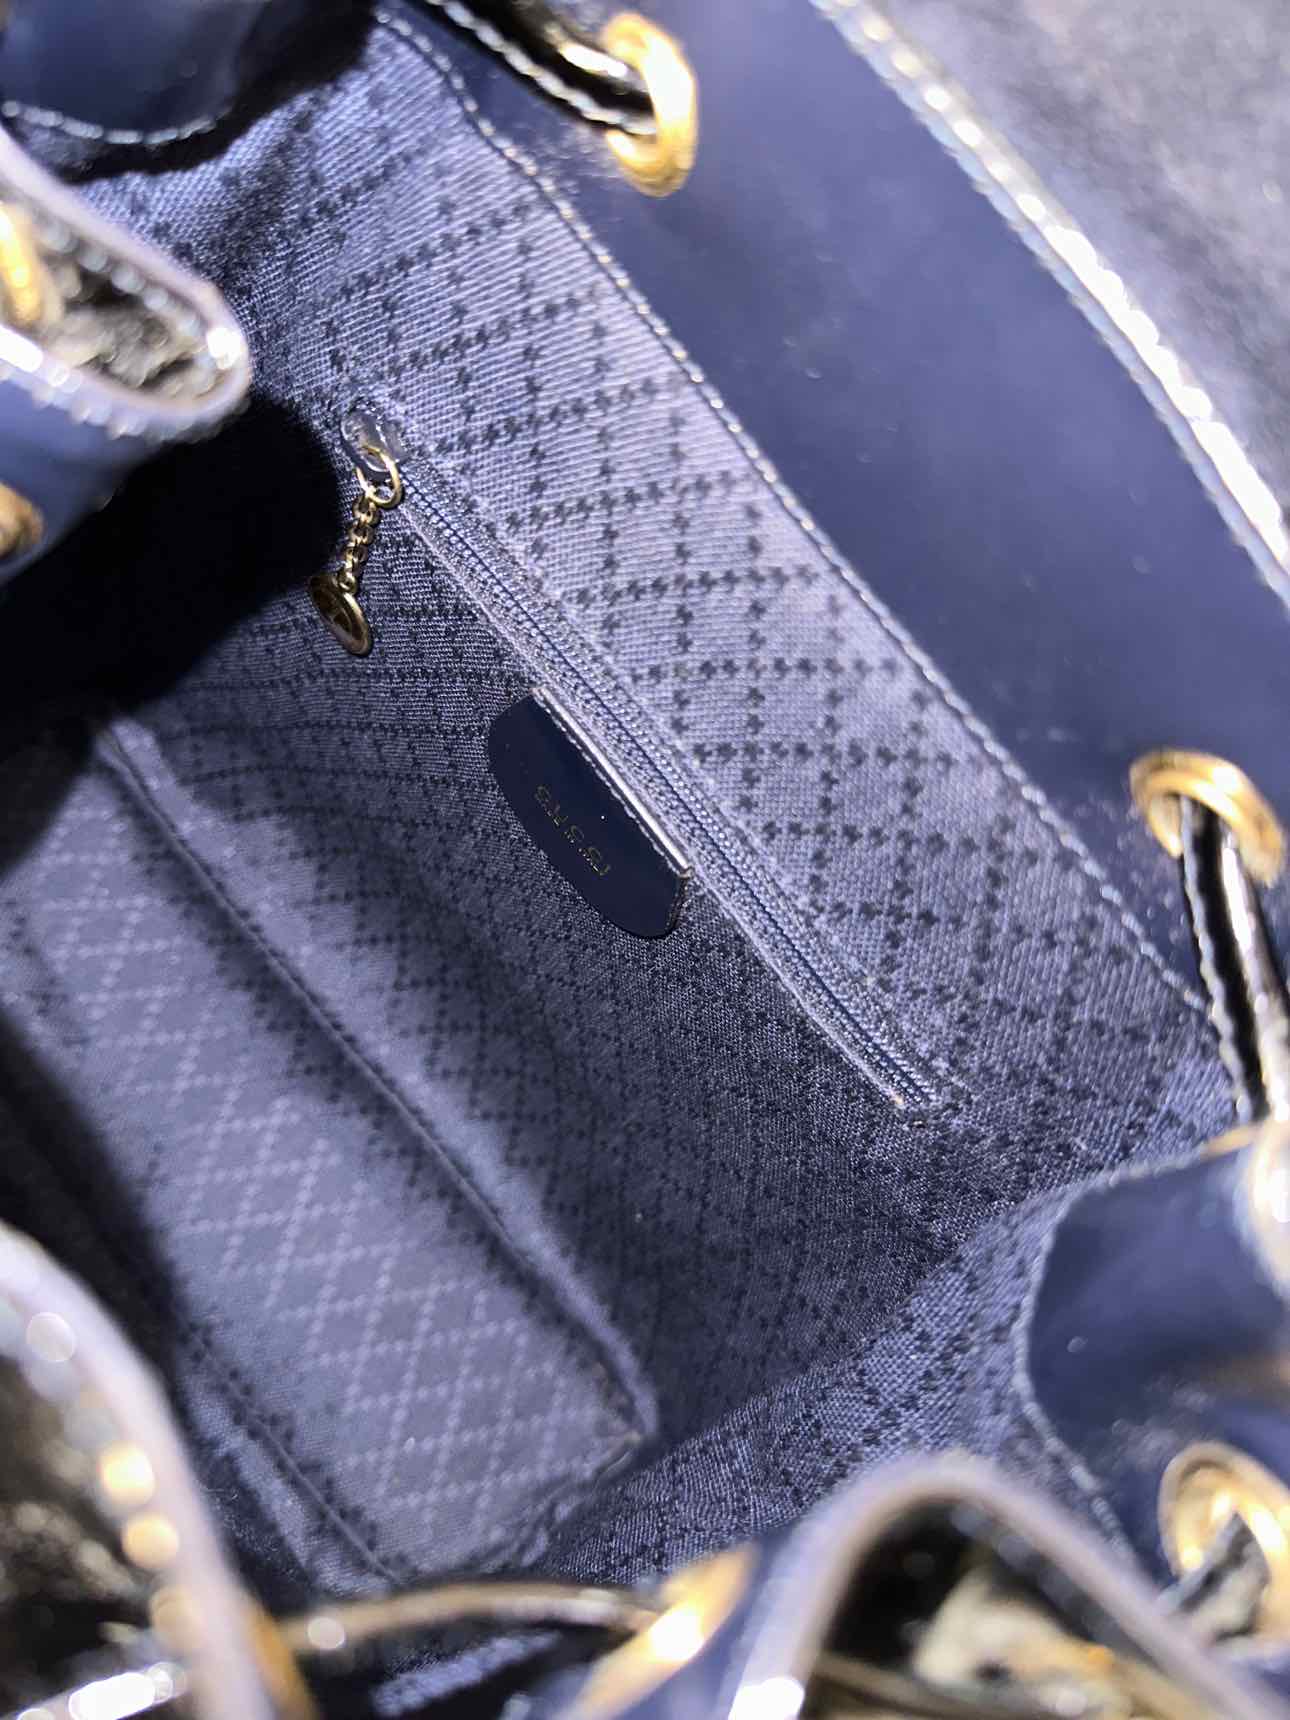 Gucci Vintage Black Patent Leather Mini Backpack